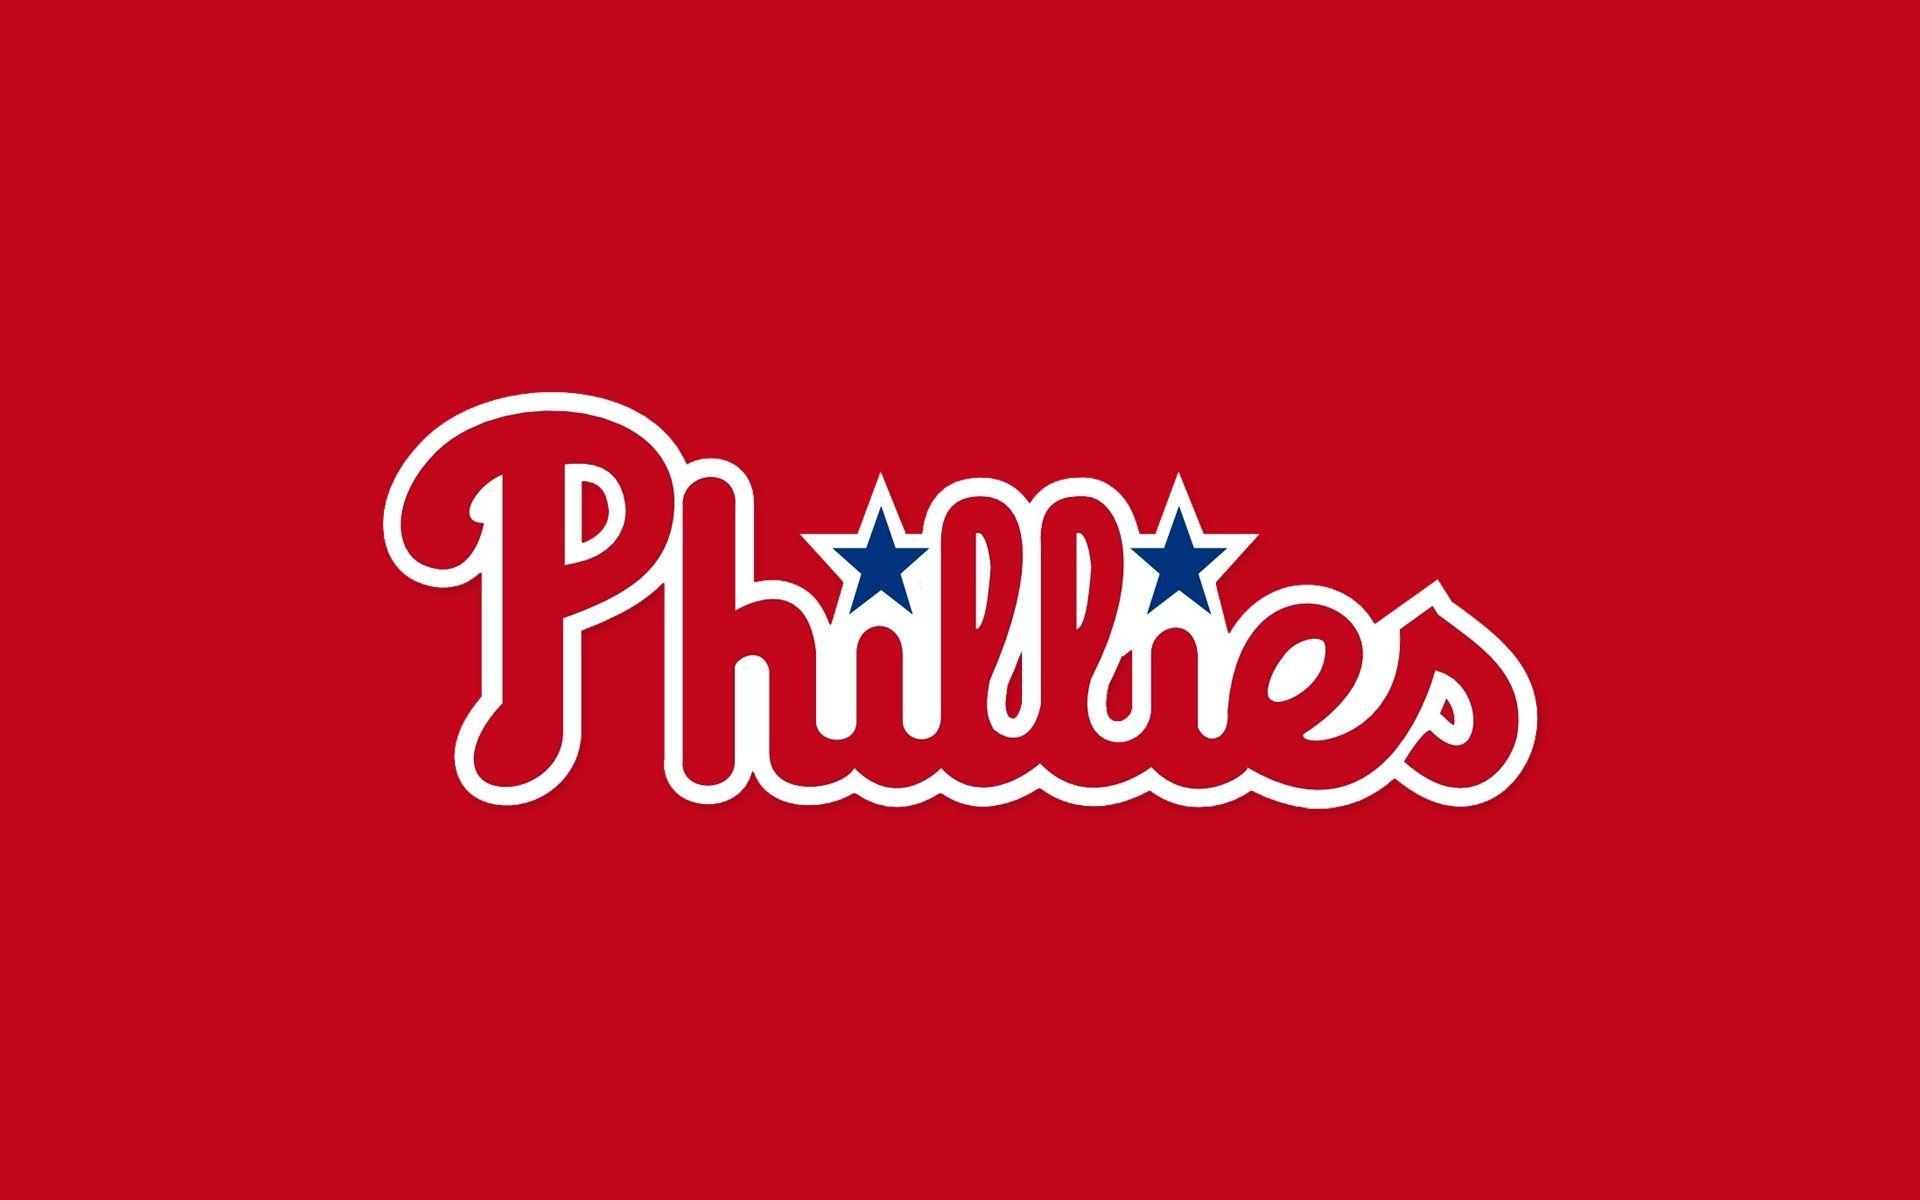 Philadelphia Phillies Wallpaper. Philadelphia Phillies Background